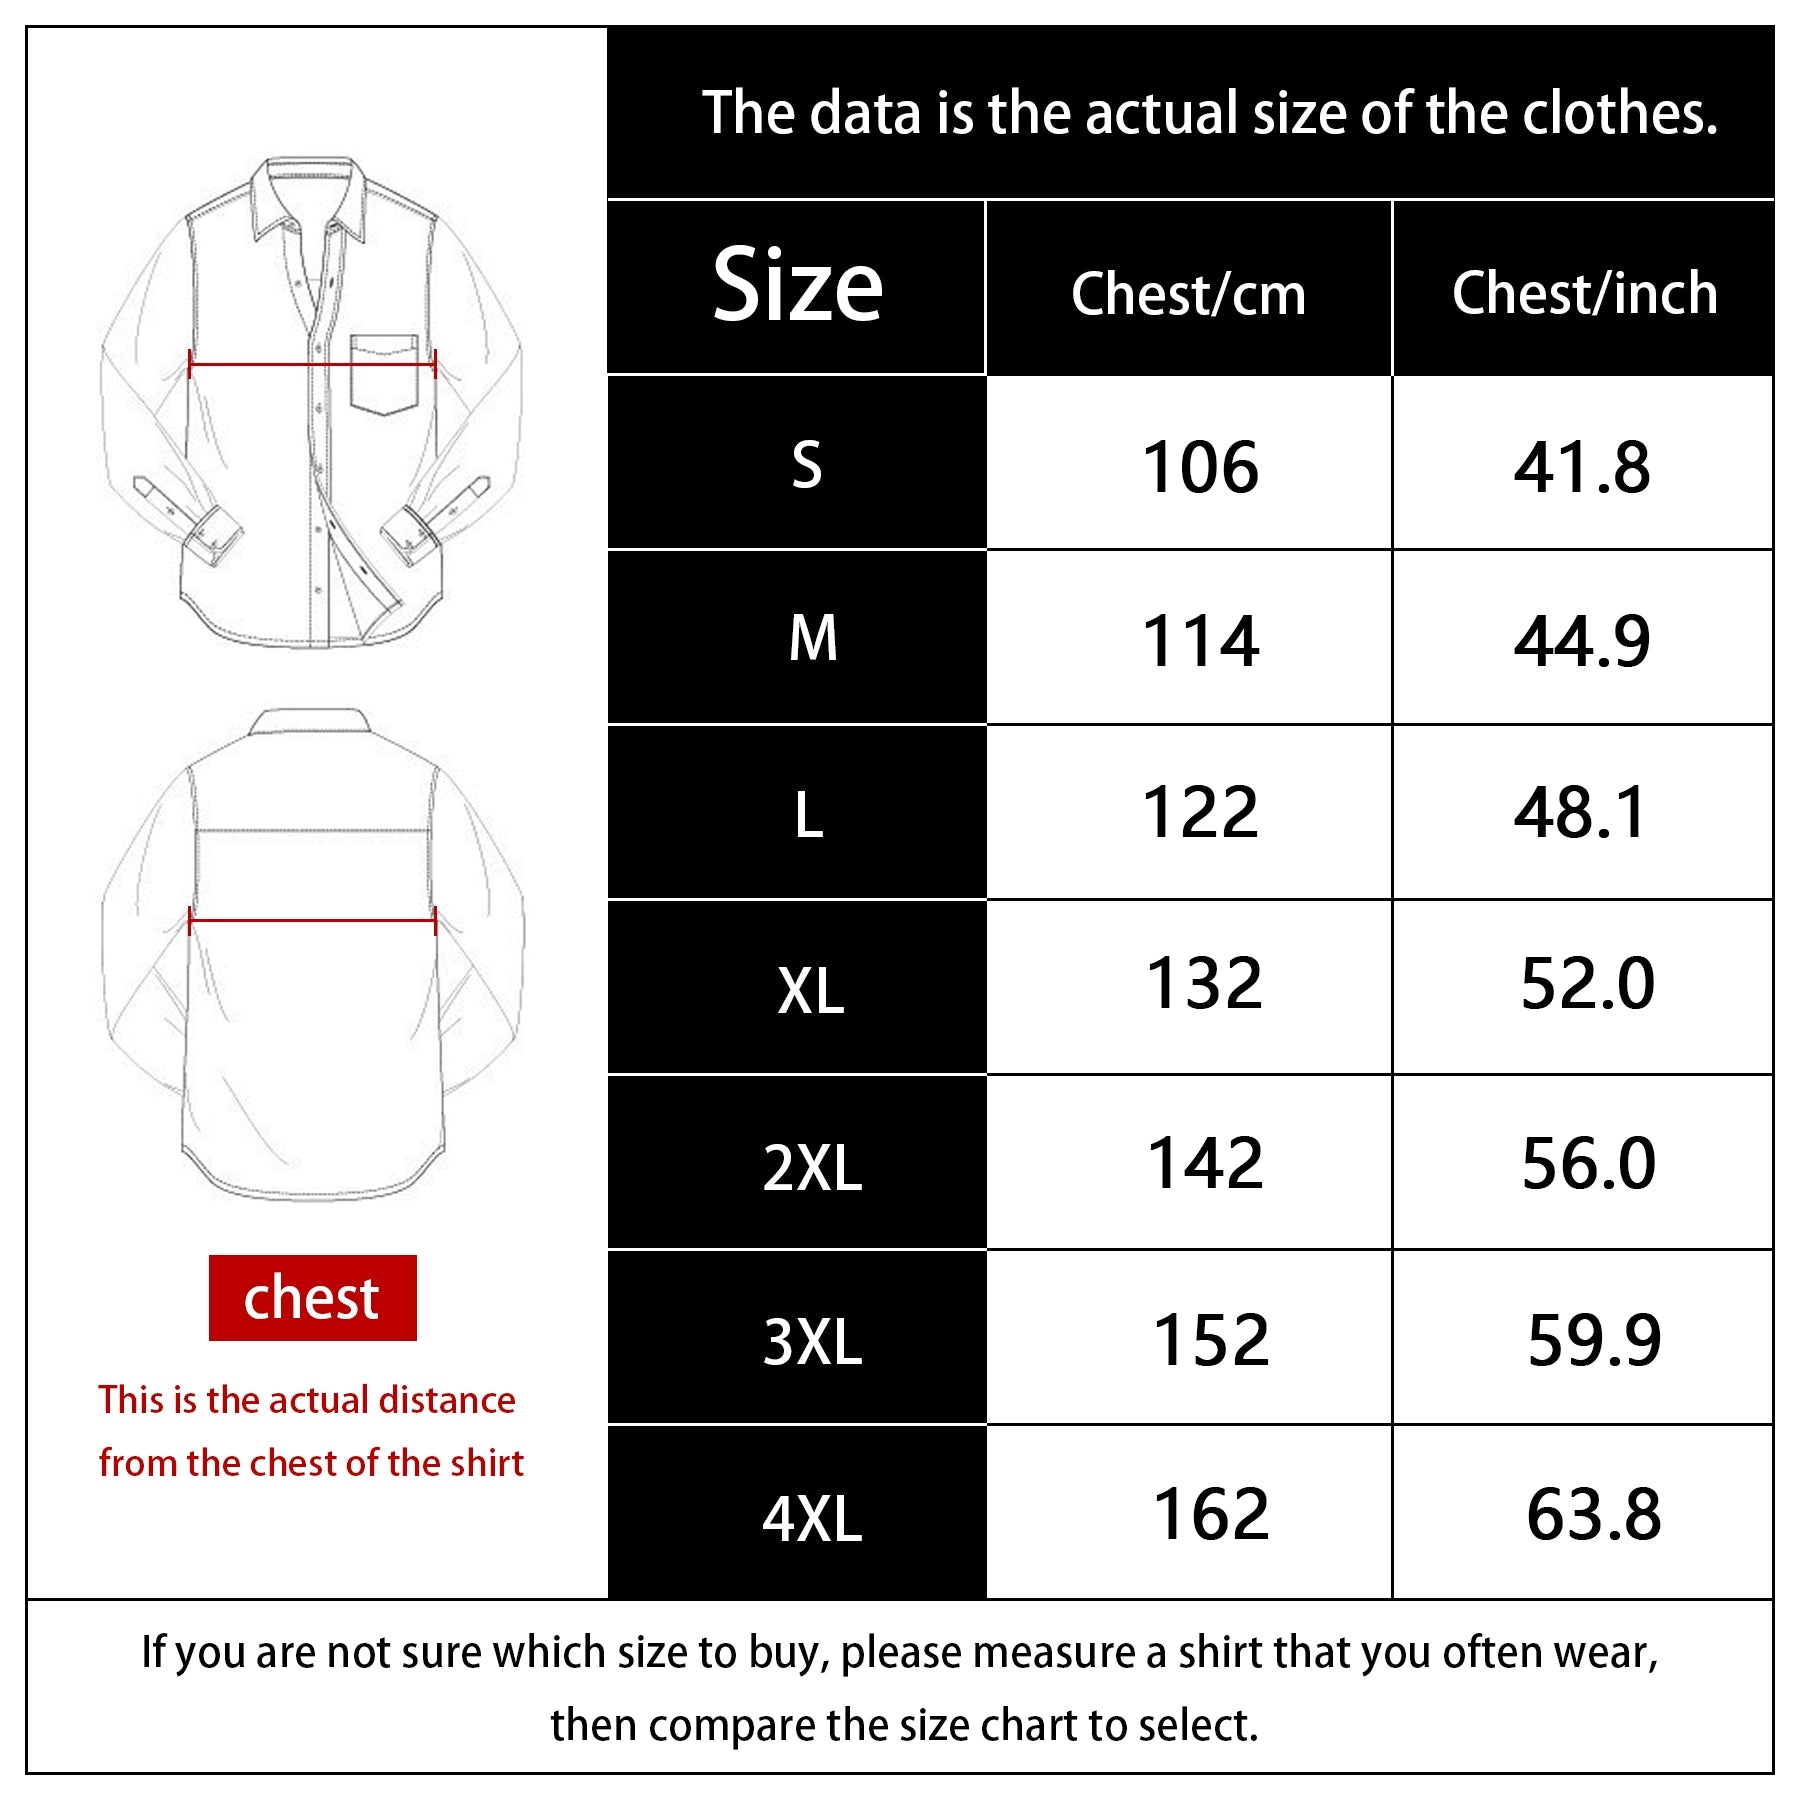 Dubinik® Mens Short Sleeve Button Down Shirts 100% Cotton Plaid Men's Casual Button-Down Shirts with Pocket#02076